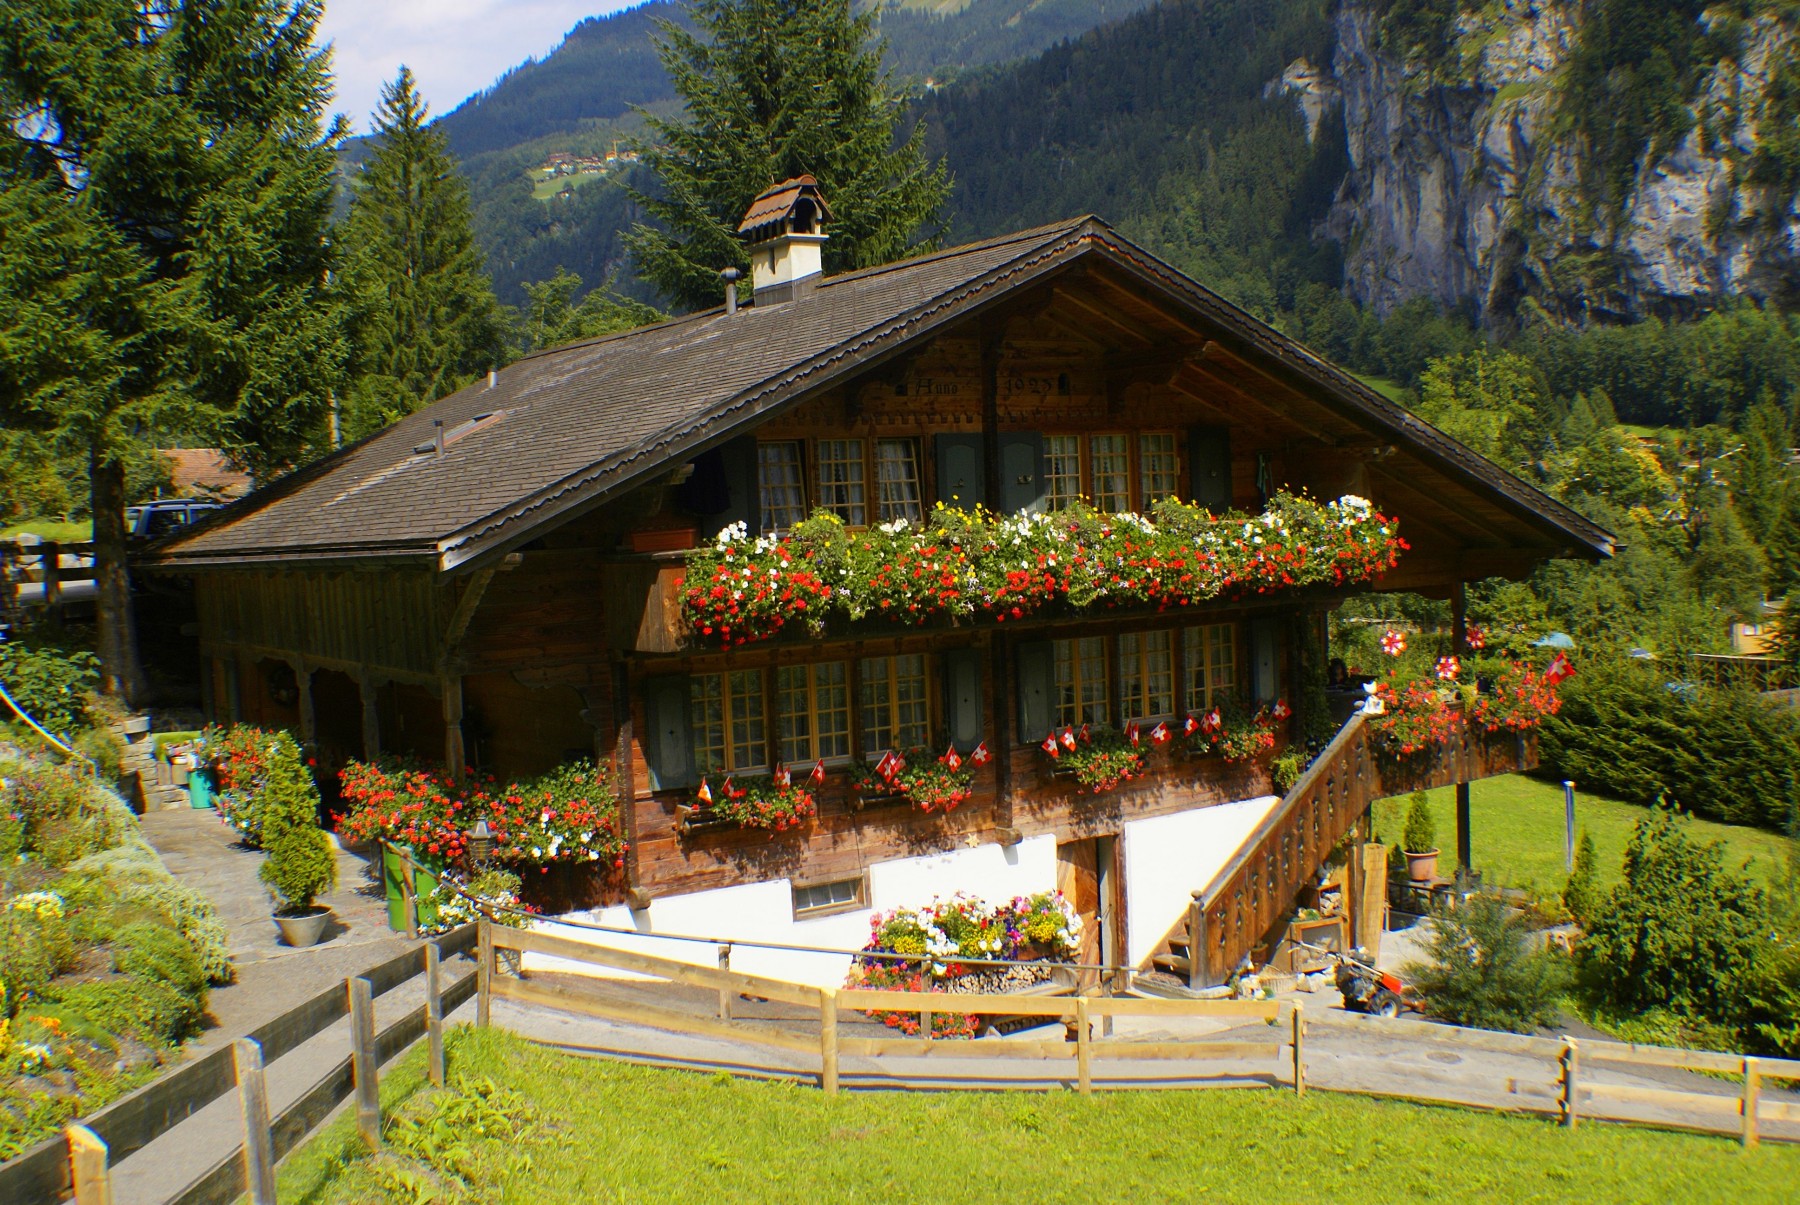 Swiss Alpine Herbs - Organic Alpine Herbs Tea (30 G)